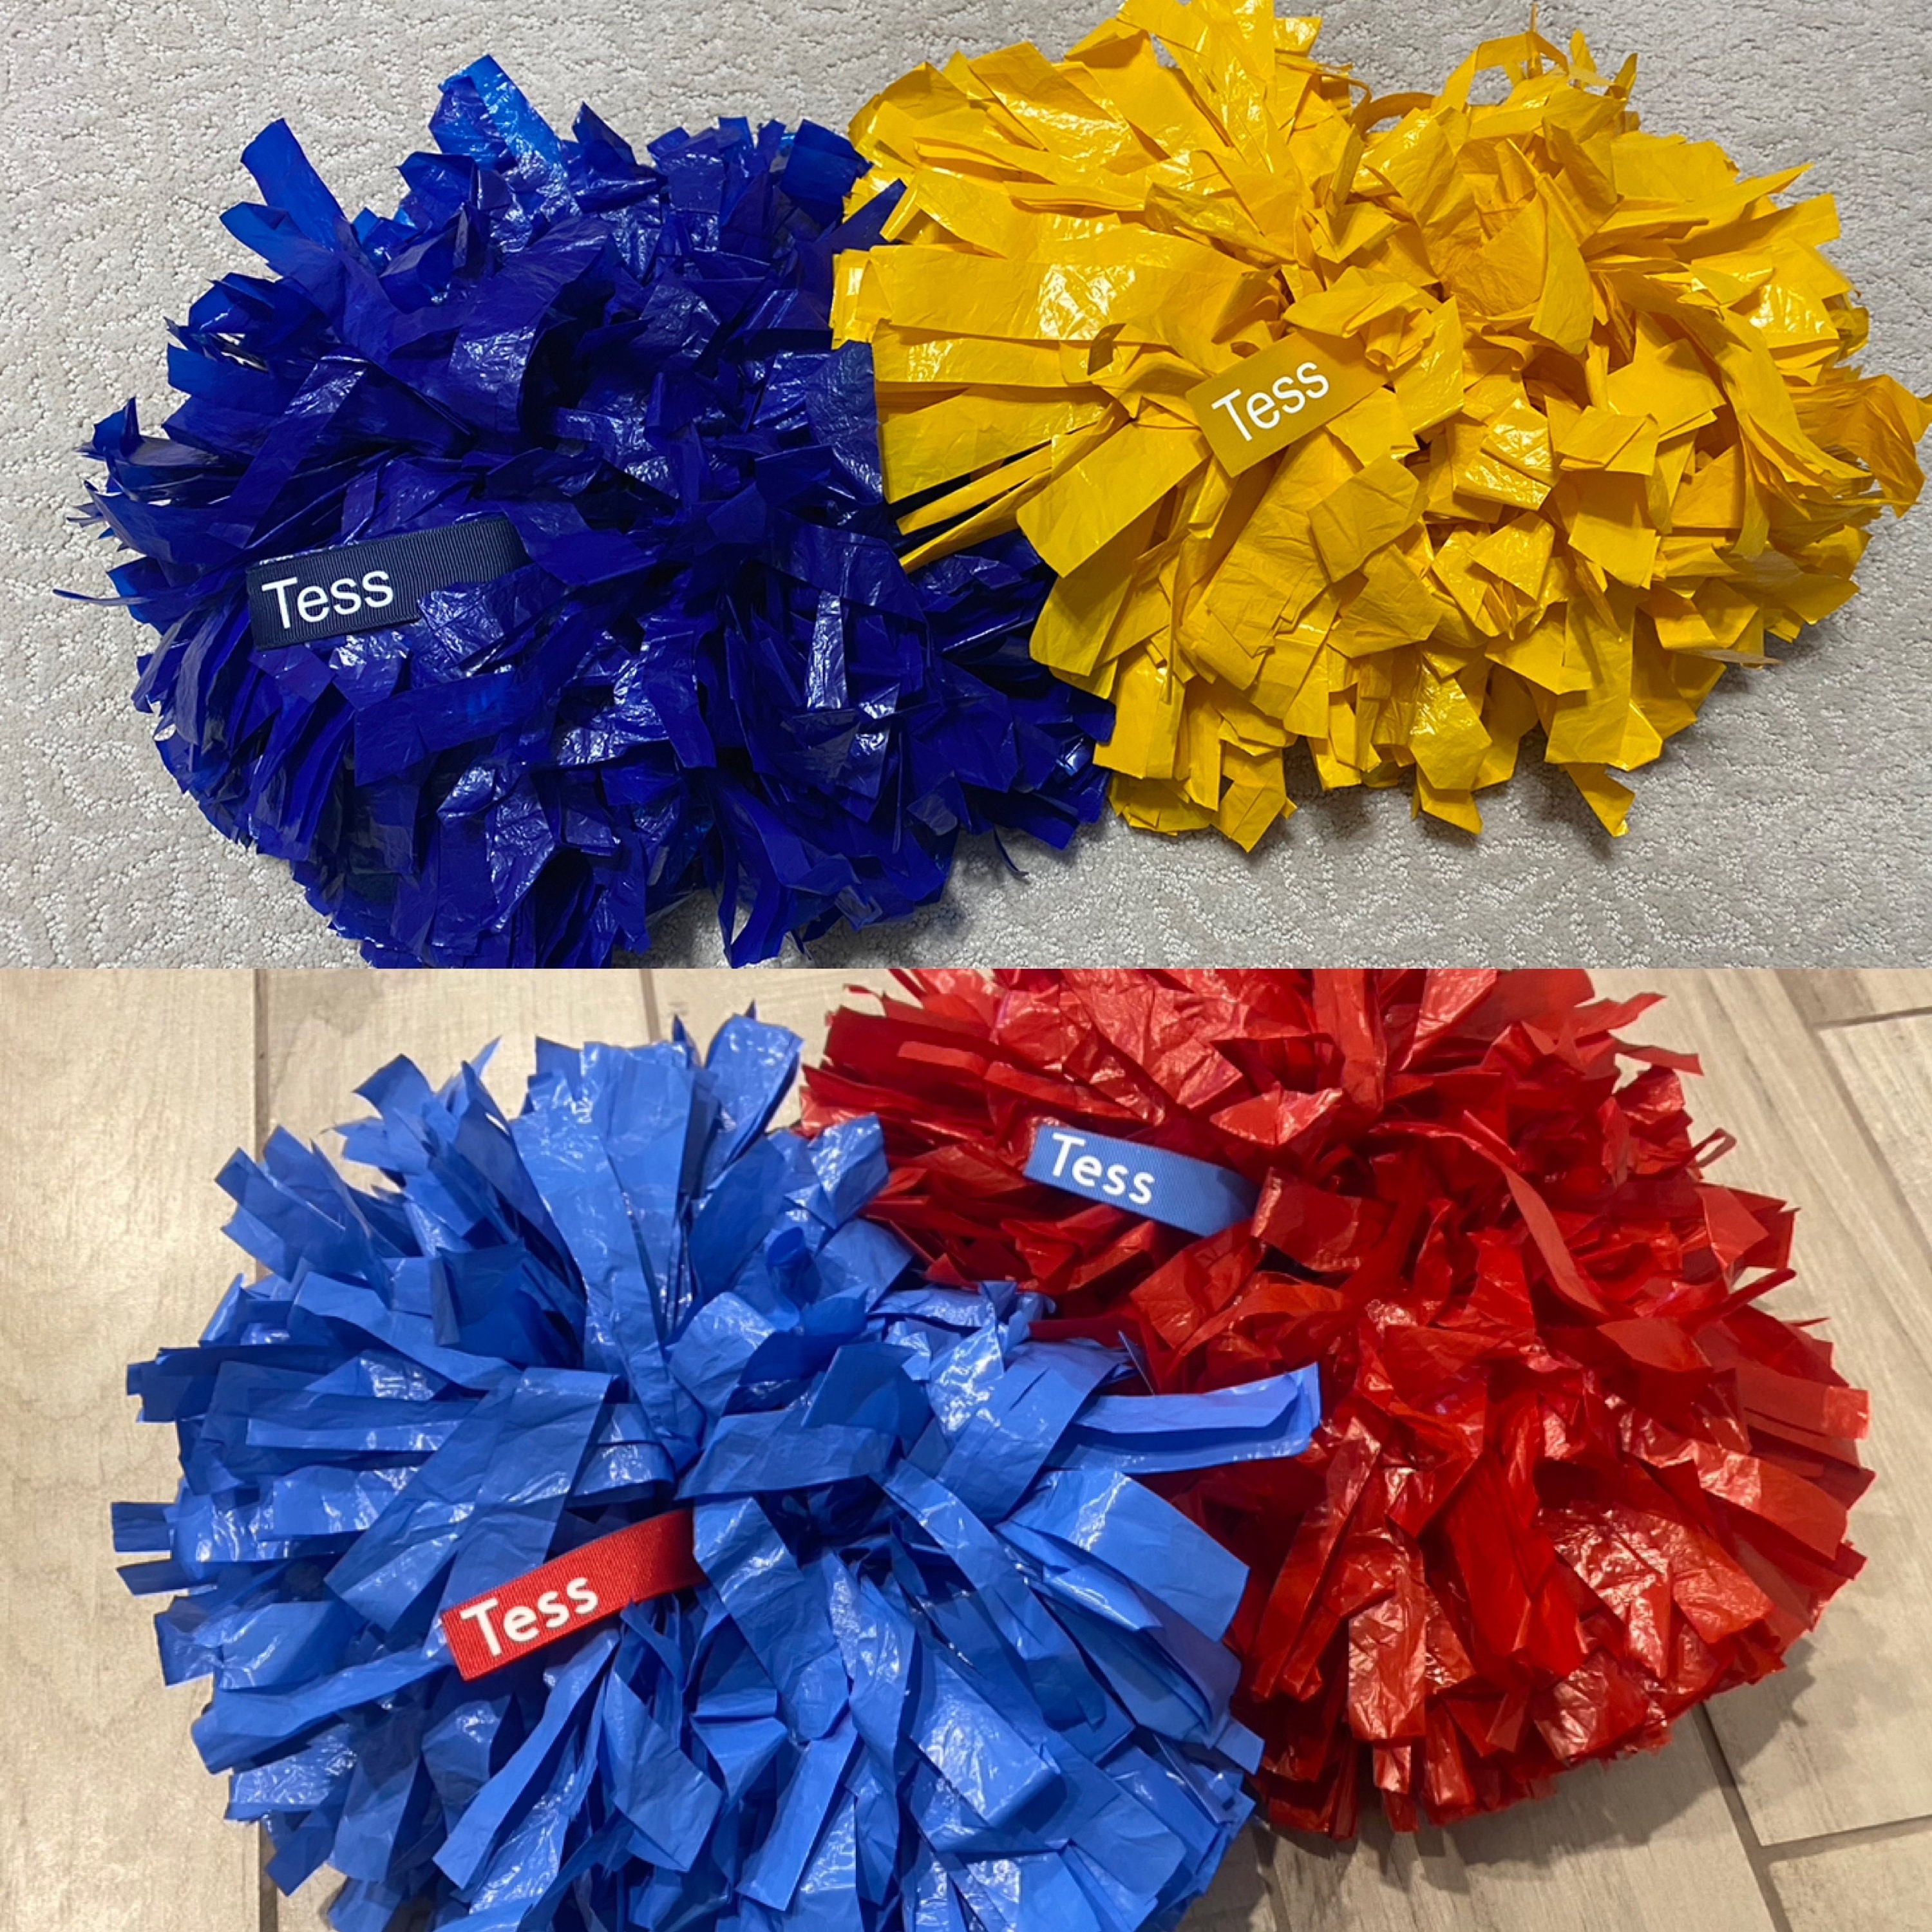 Plastic Cheer Pom Poms Cheerleading Cheerleader Gear 2 pieces one pair  poms(Columbia Blue/White)